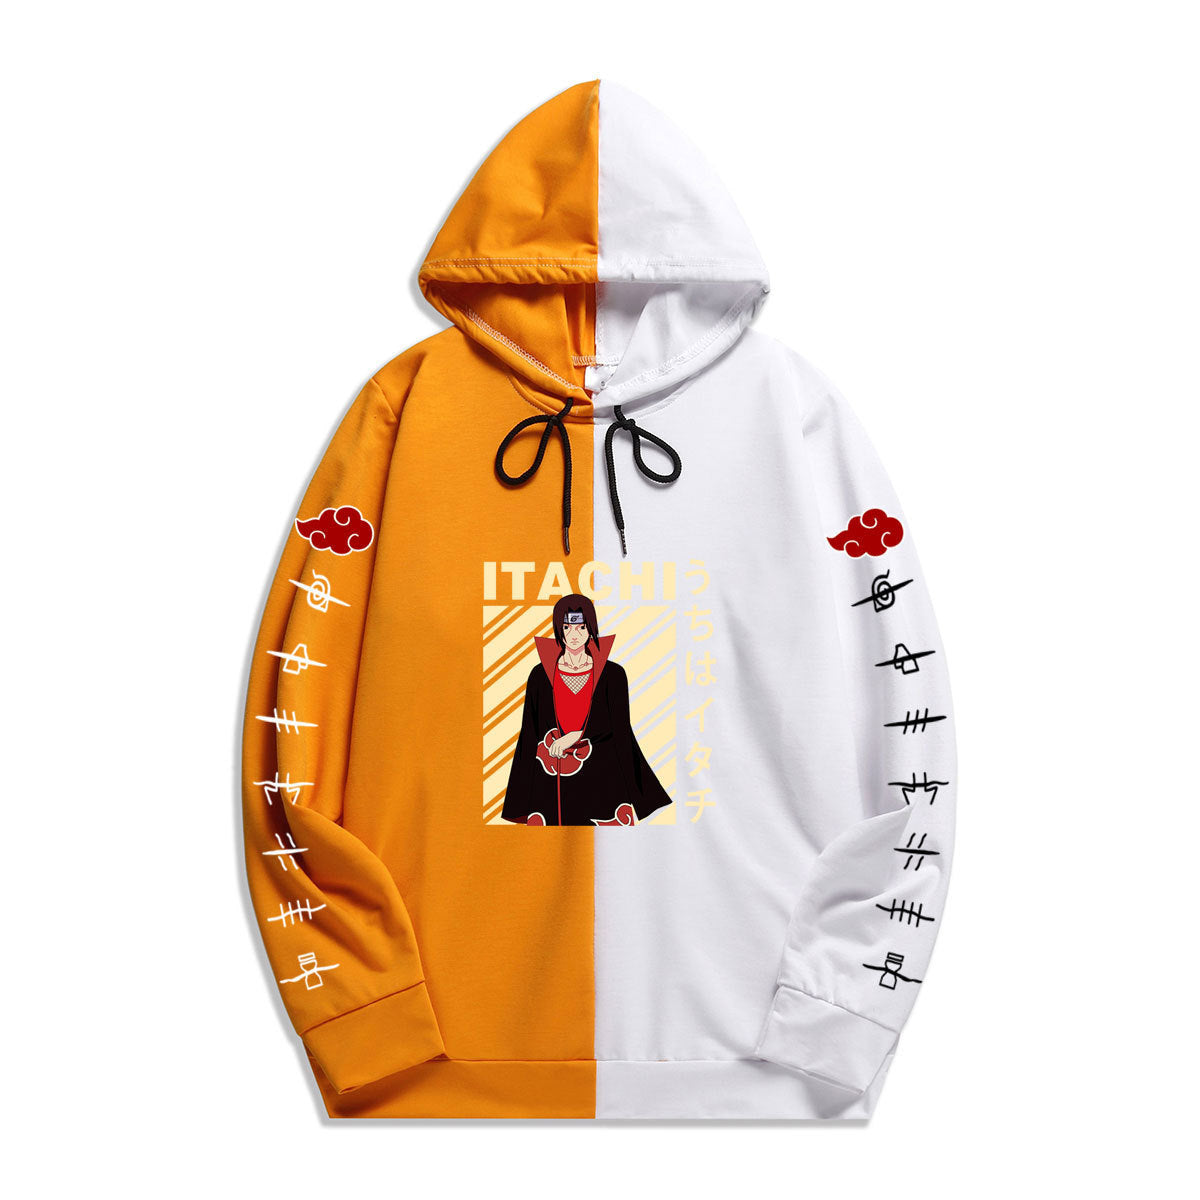 Japan Anime Naruto Itachi Splicing Printed Hoodie Sweatshirt Pullover Casual Hoodies